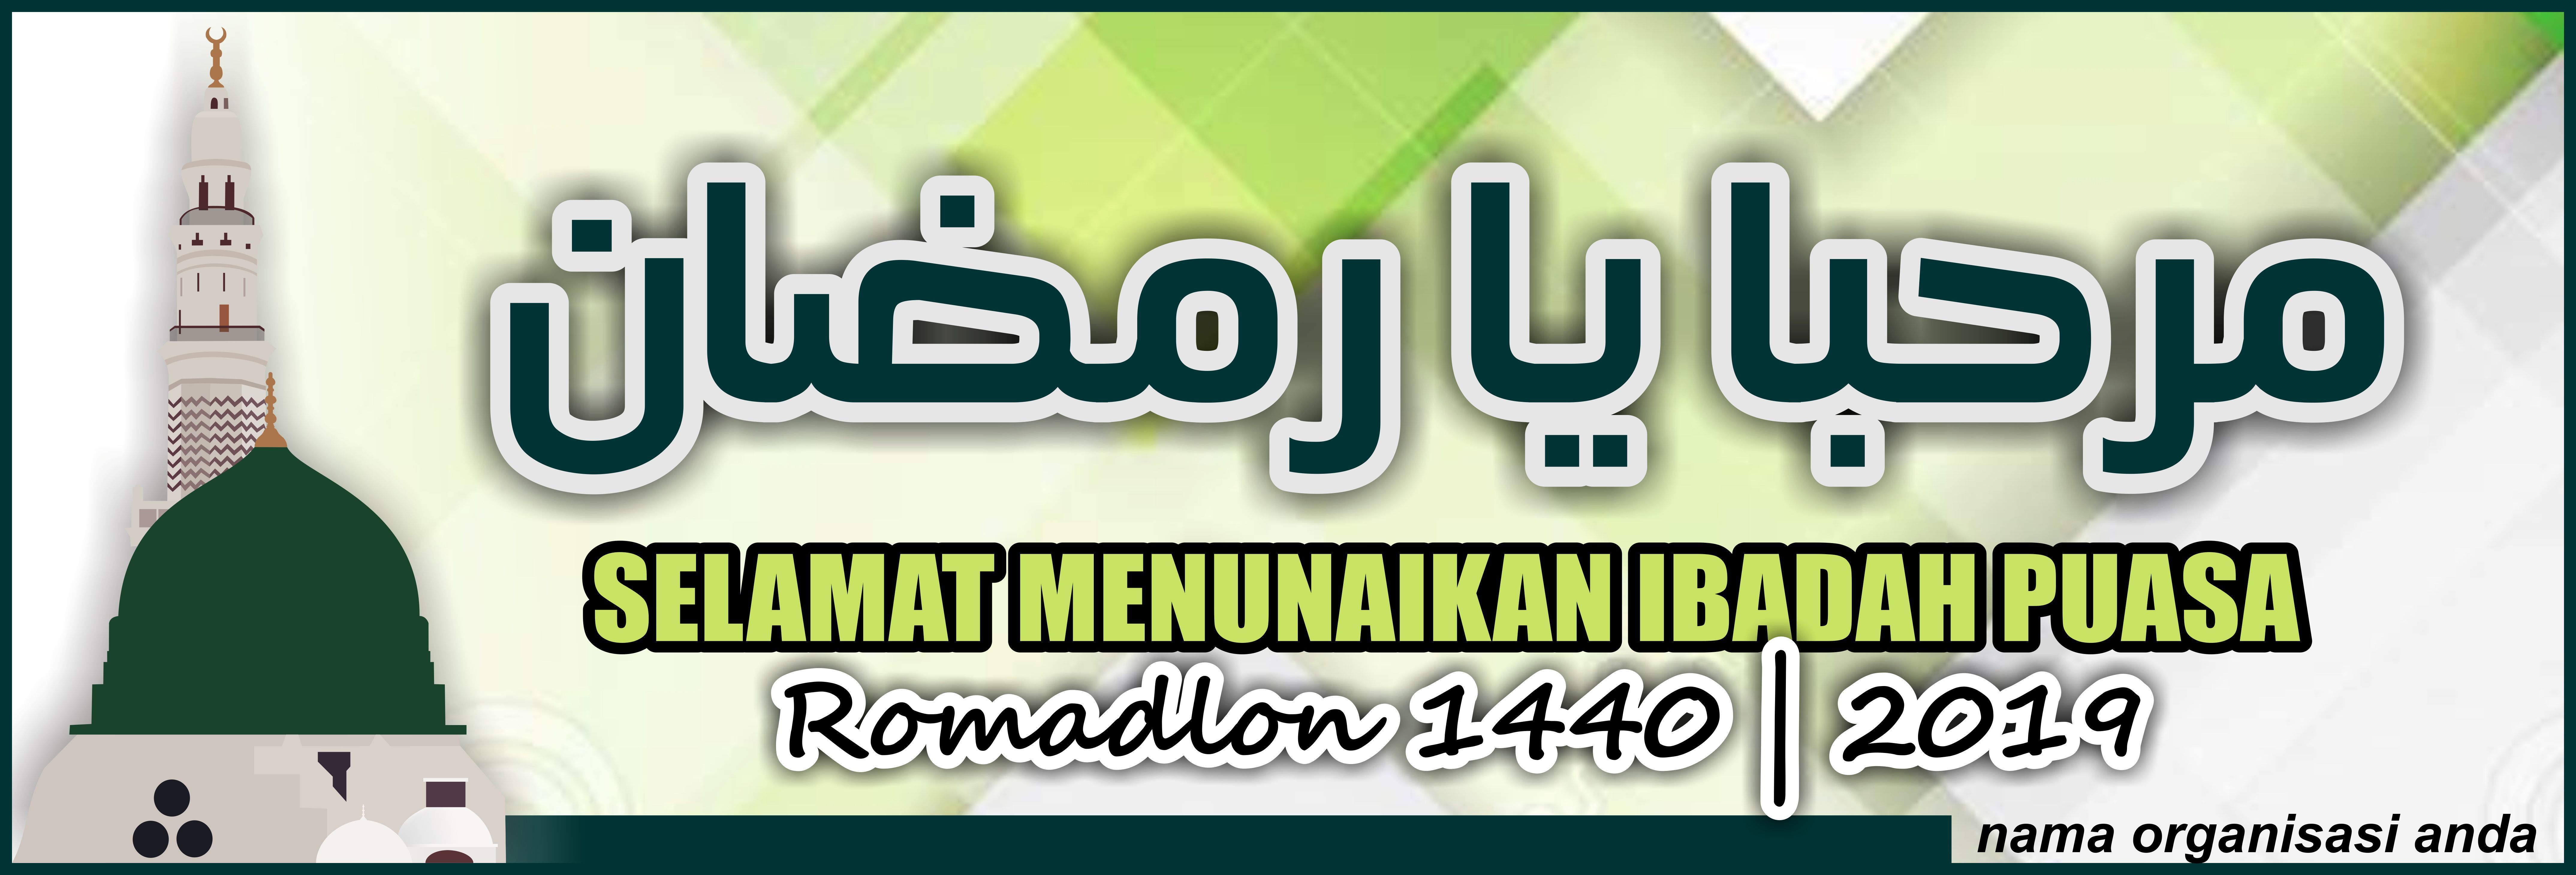 Download desain banner ramadhan cdr